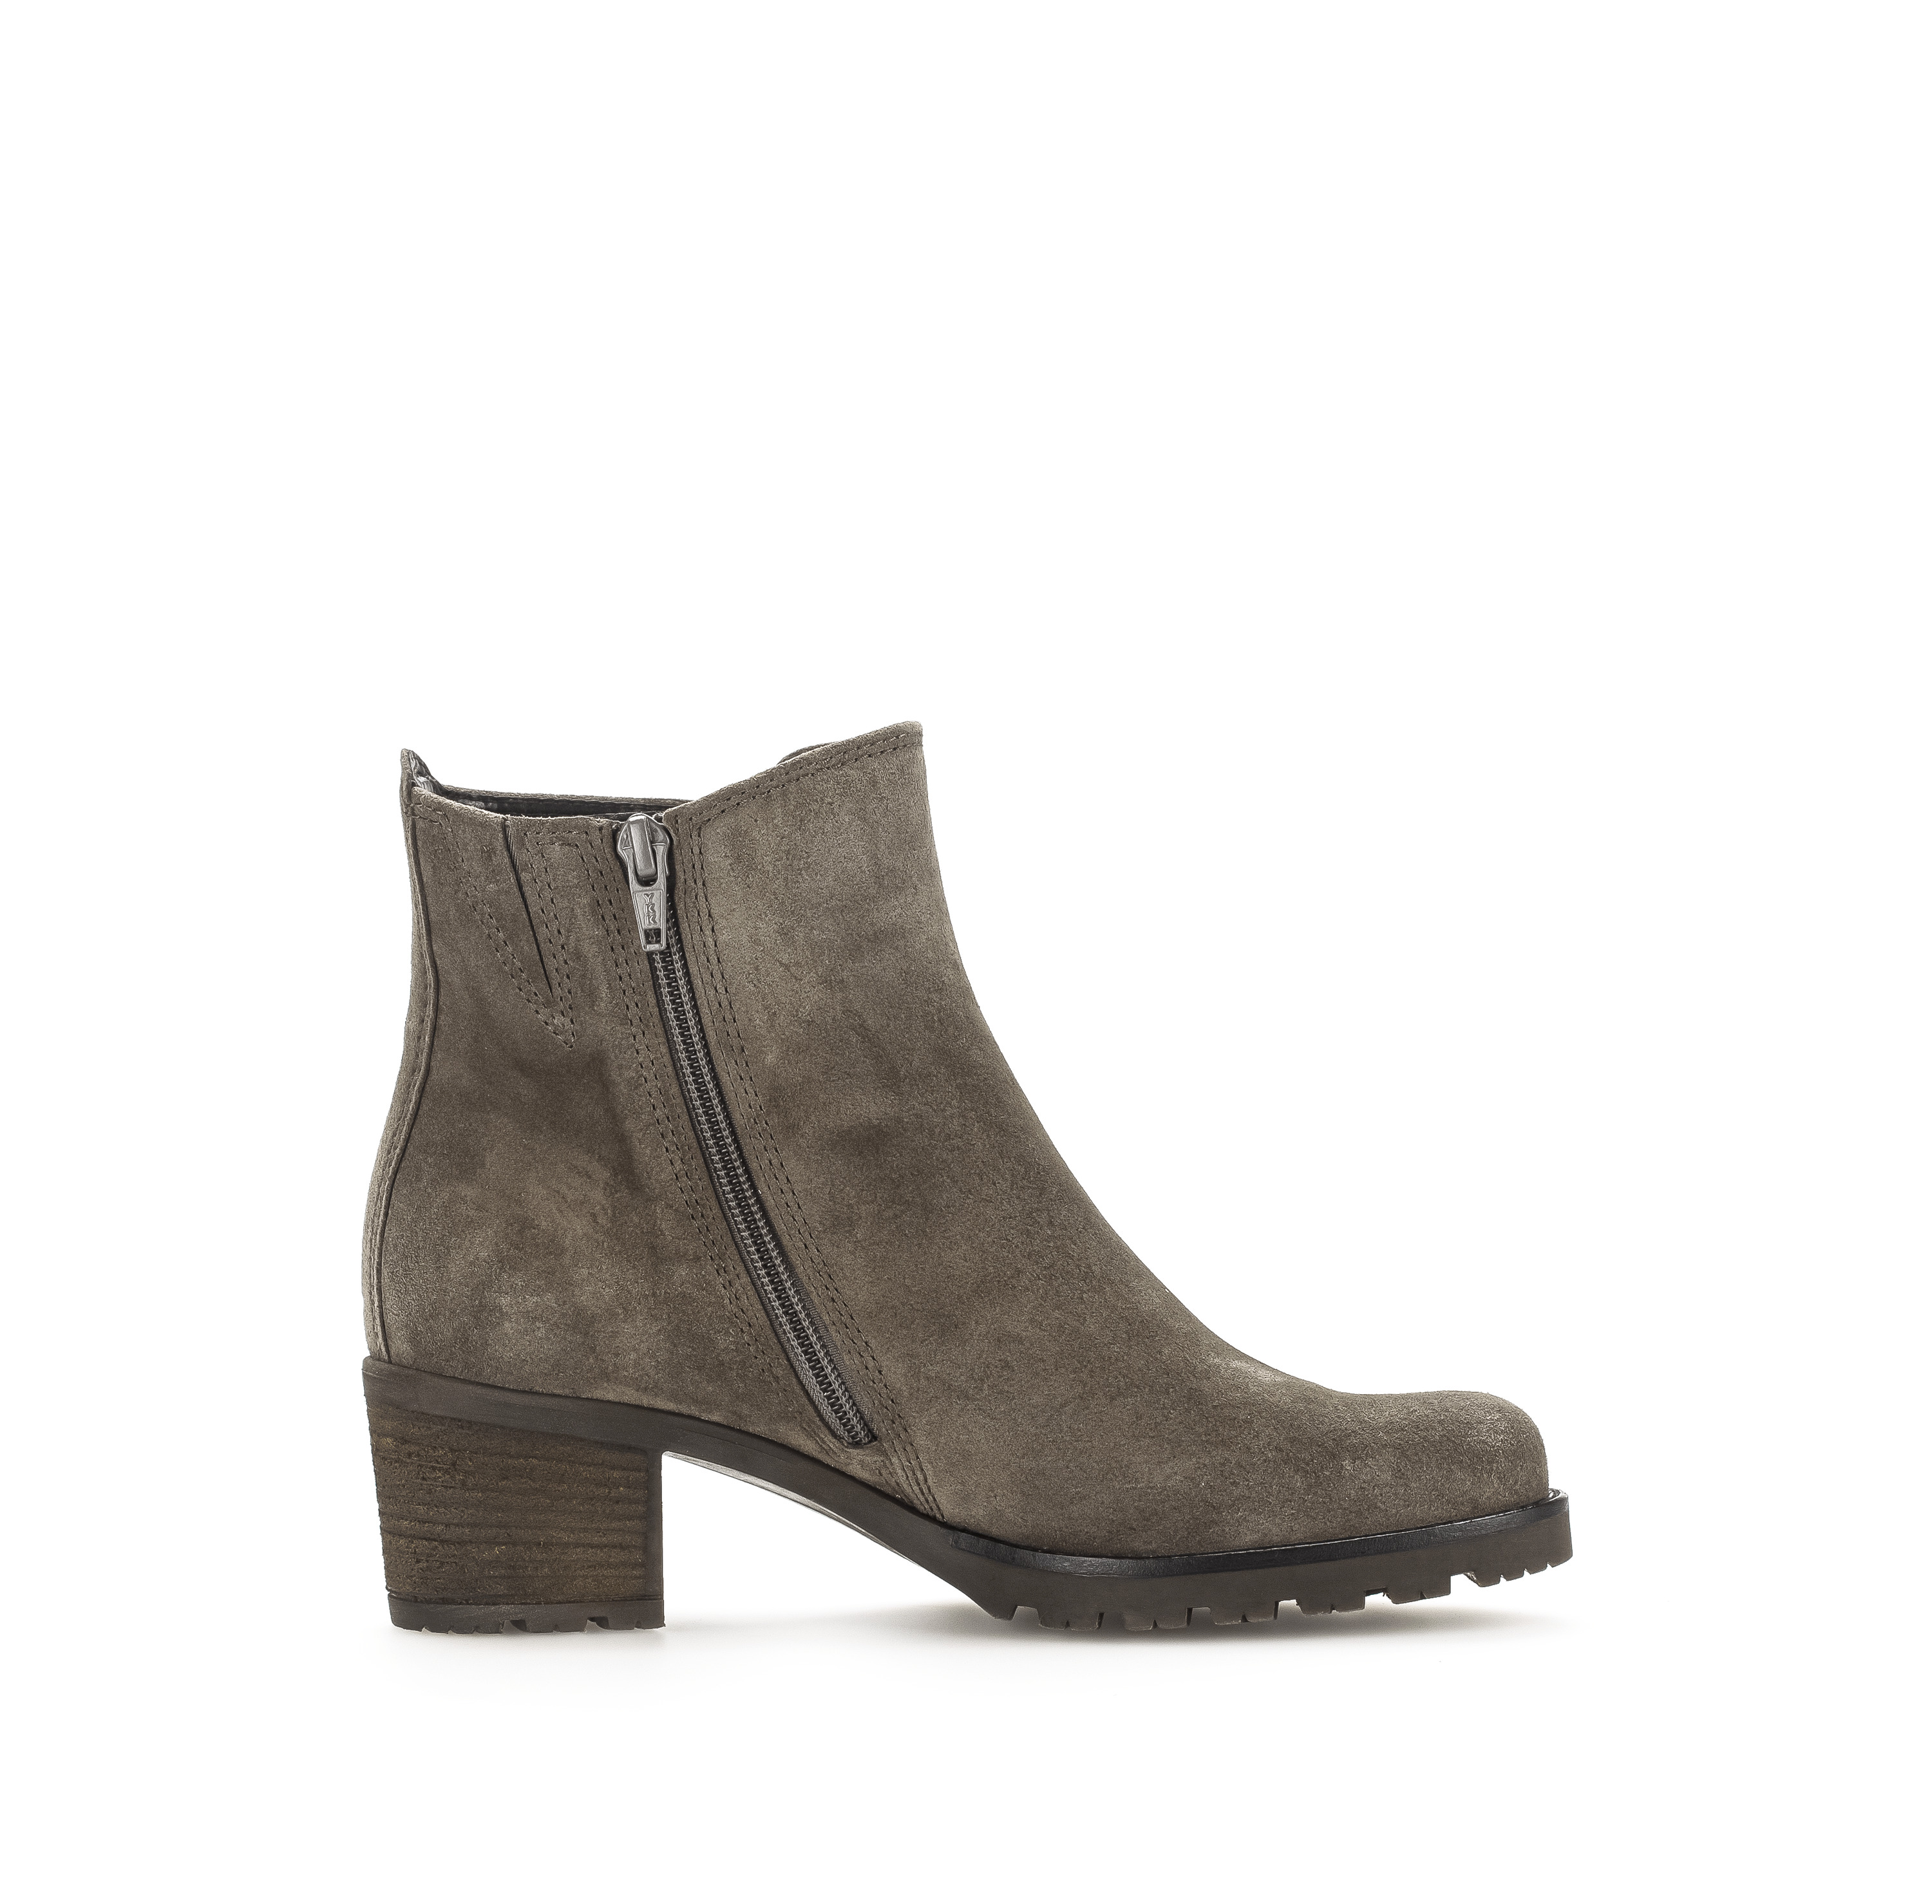 Gabor Shoes Stiefelette - Grau Leder